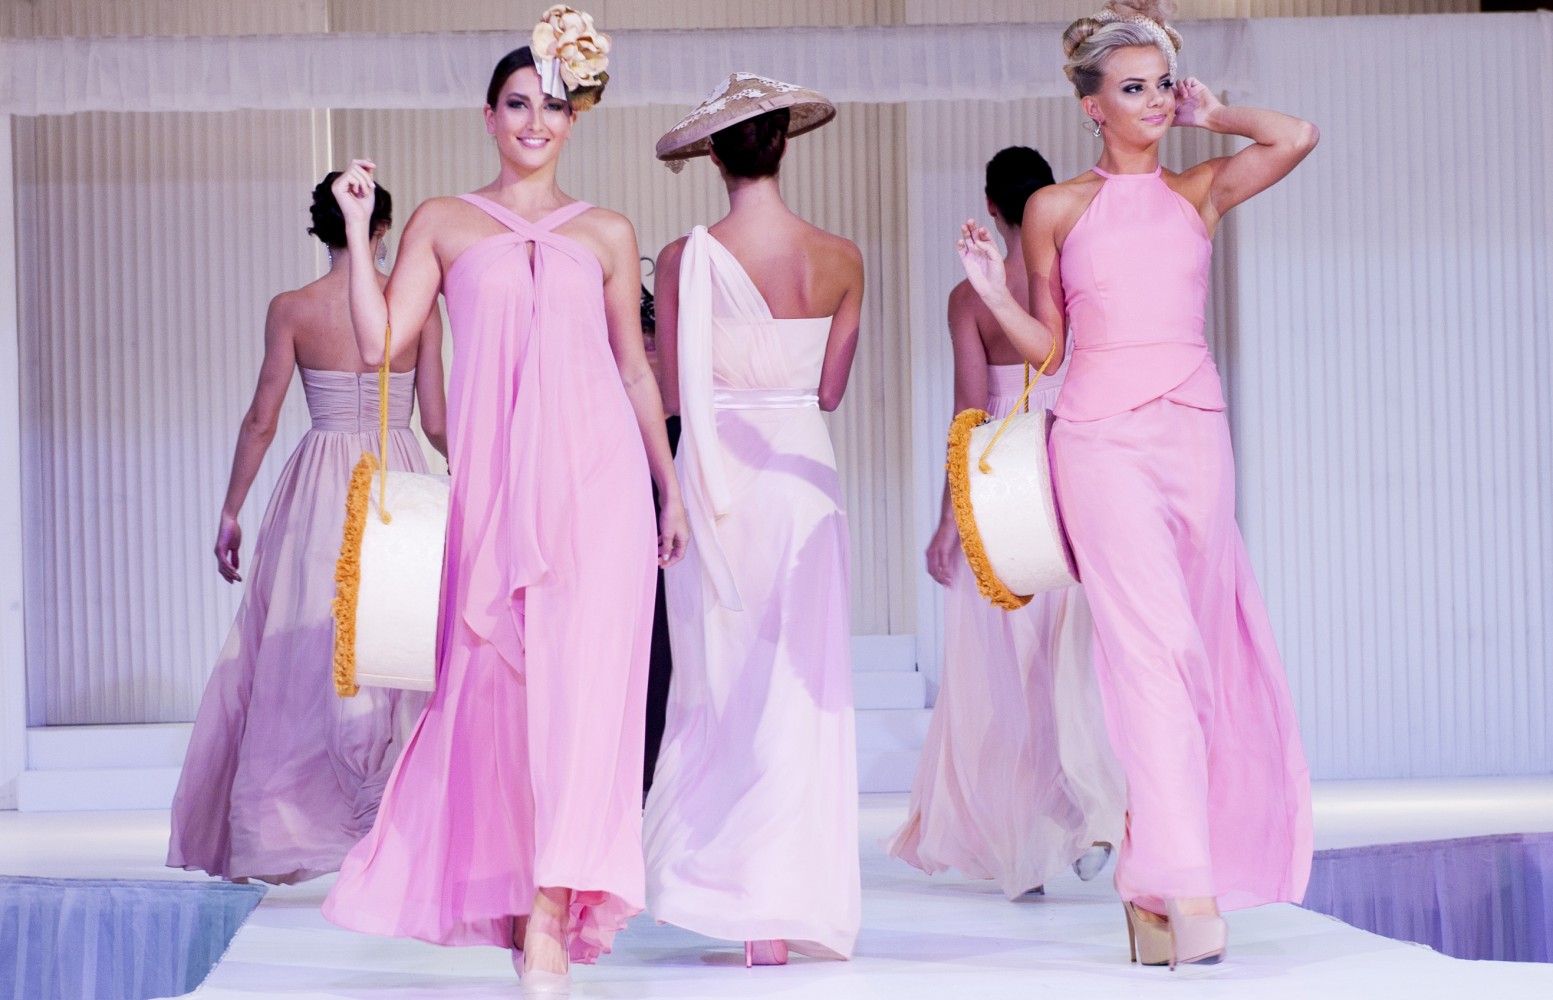 sydney bridal expo natasha millani bridesmaid dresses pink 1553x1000